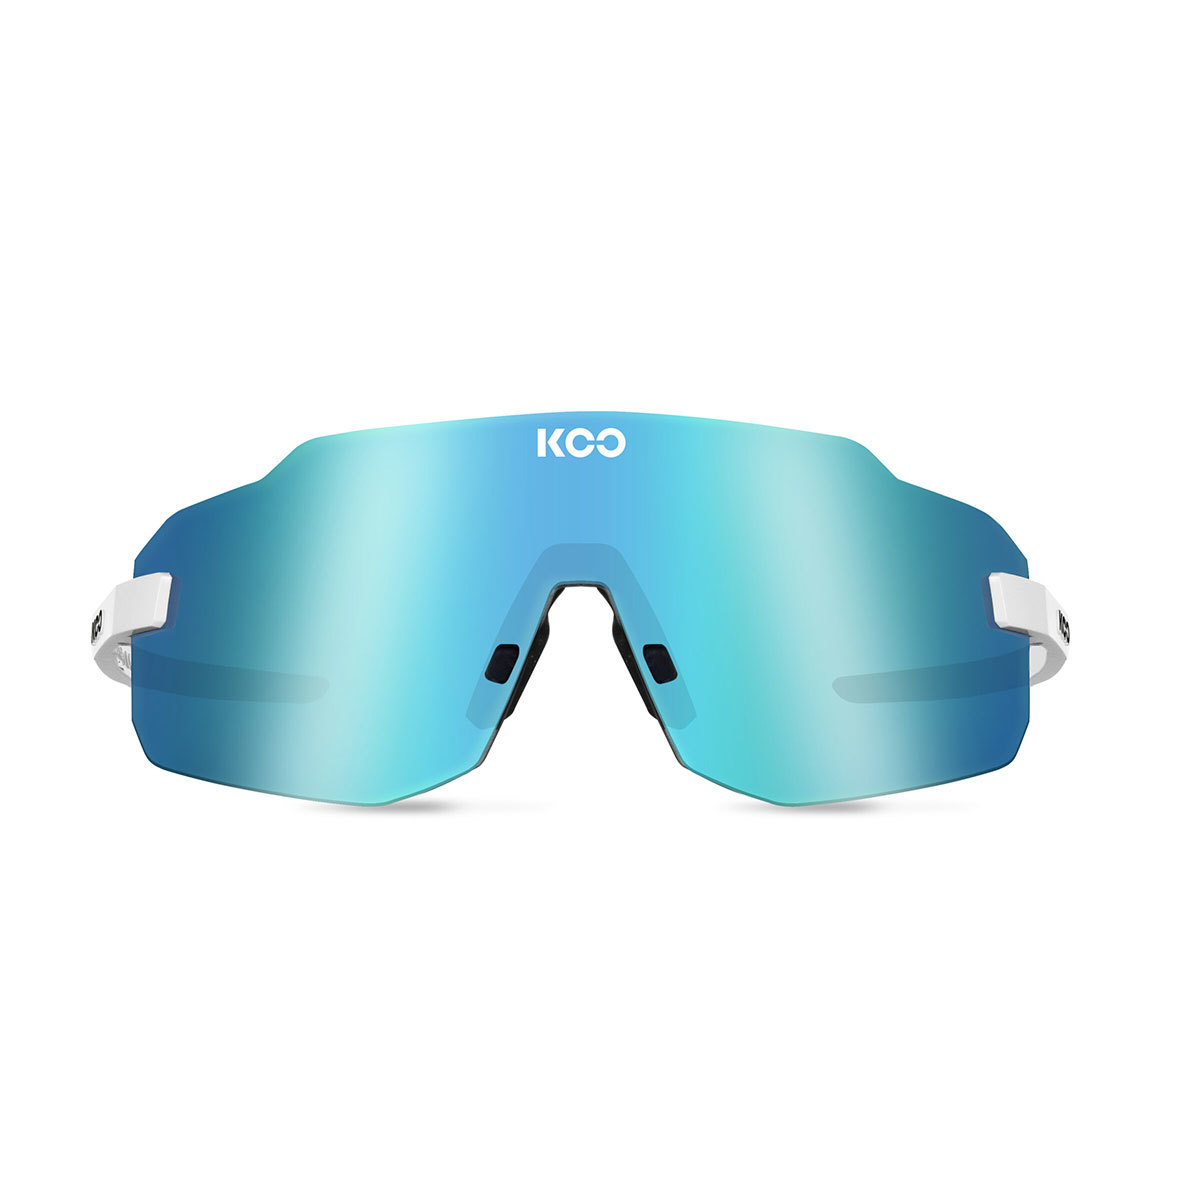 KOO SUPERNOVA Sport Zonnebril Wit met Turquoise Mirror Lens